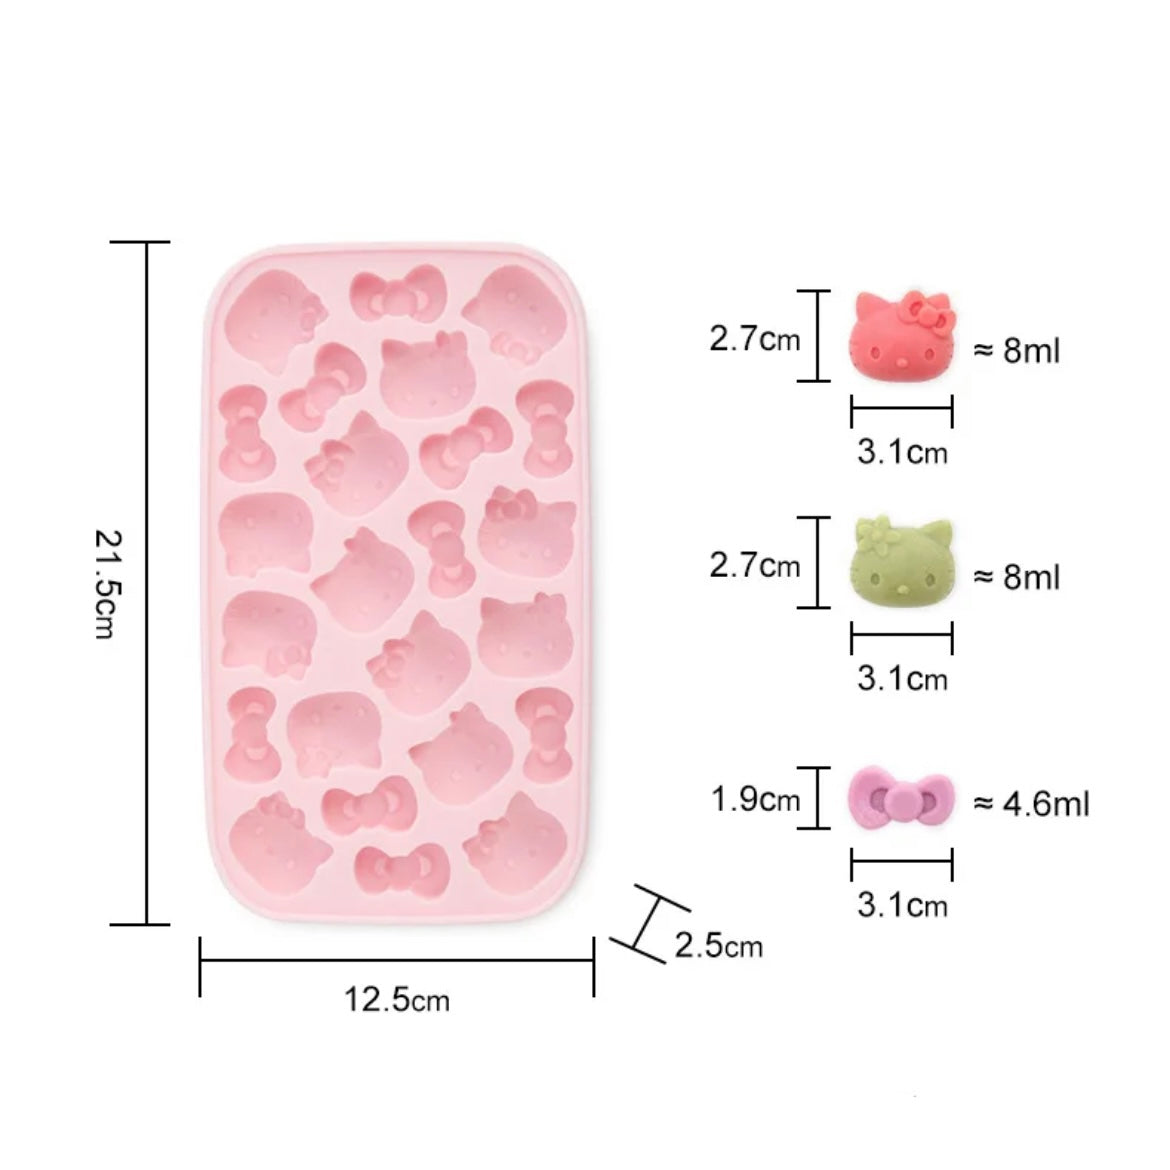 Hello Kitty Novelty Non-Toxic Silicone Ice Cube Trays - China Ice Mold and  Silicone Ice Cube Tray price